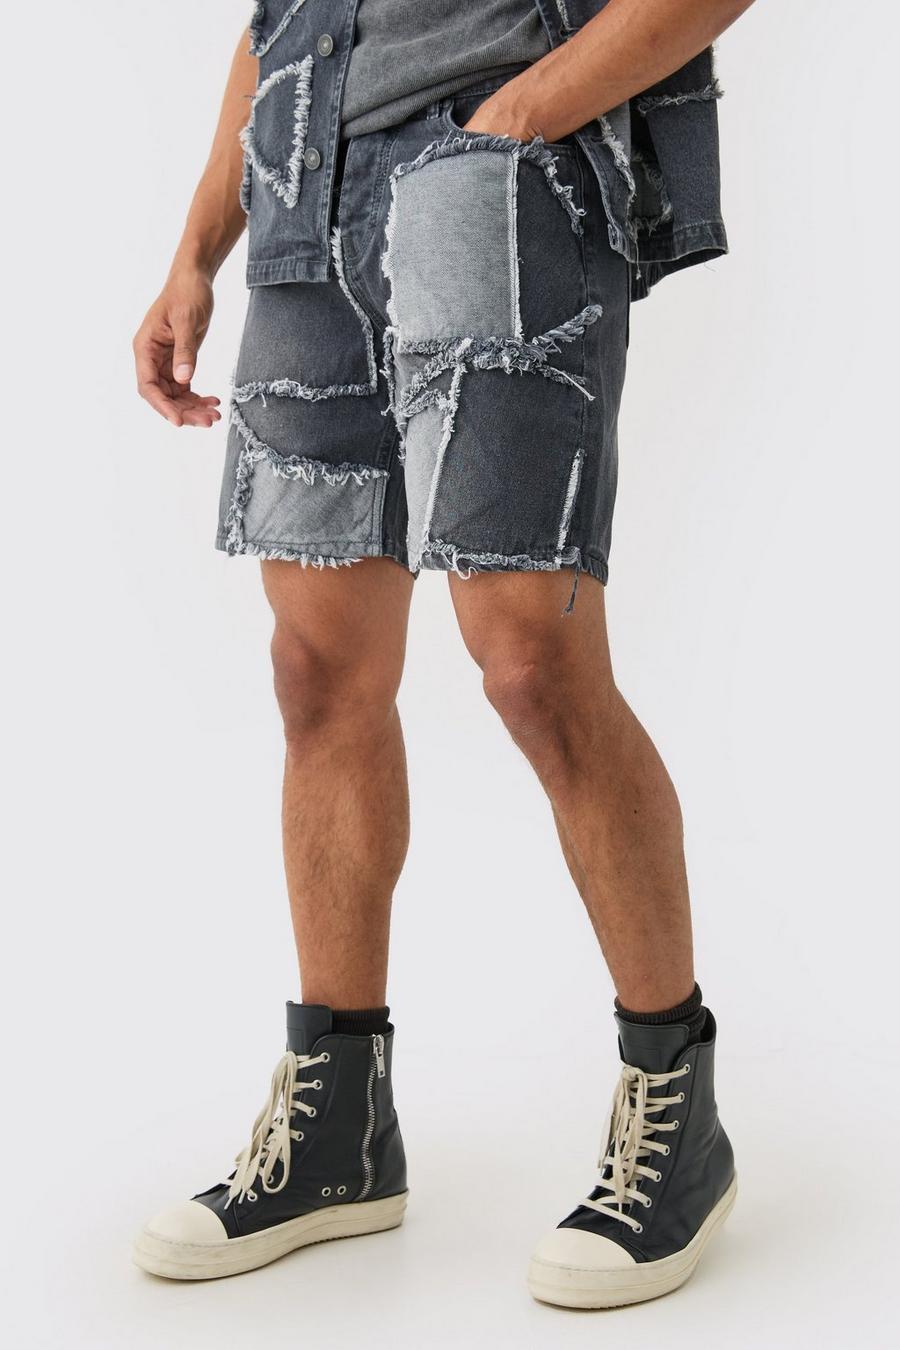 Pantalón corto vaquero holgado con retazos en color carbón, Charcoal